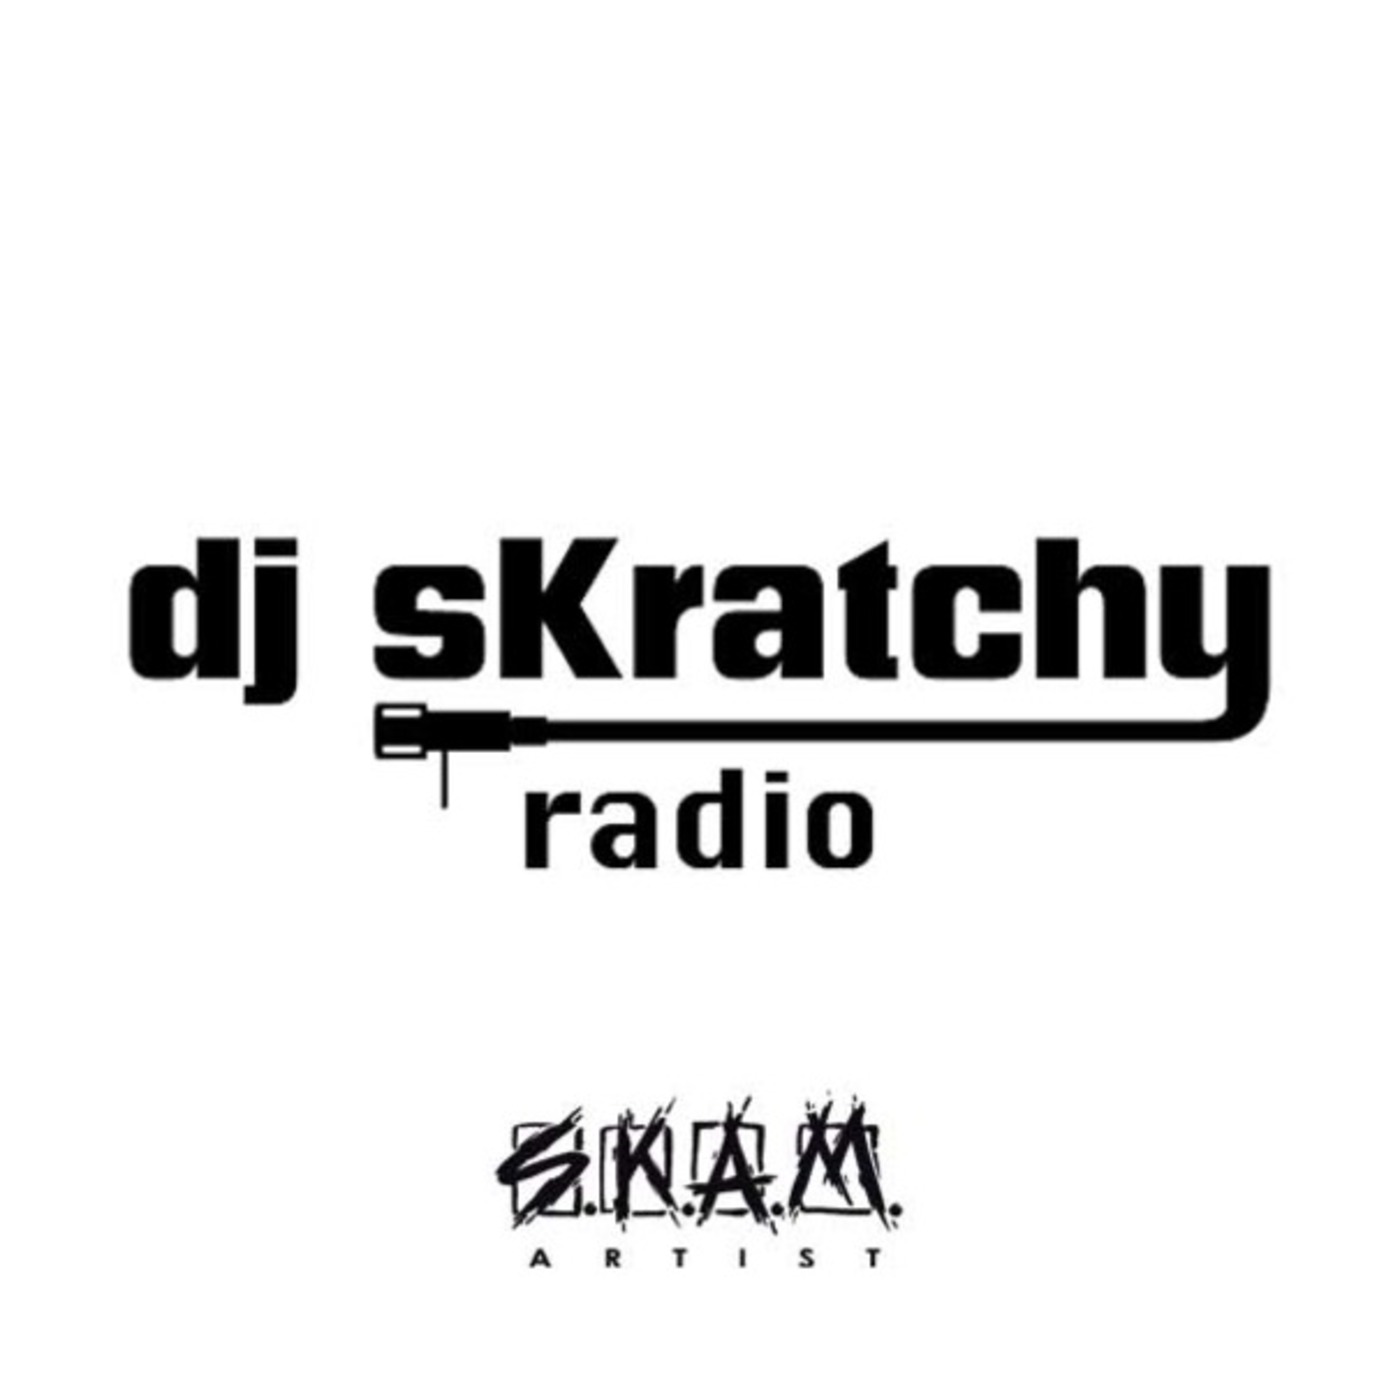 dj sKratchy - August 2012 Podcast